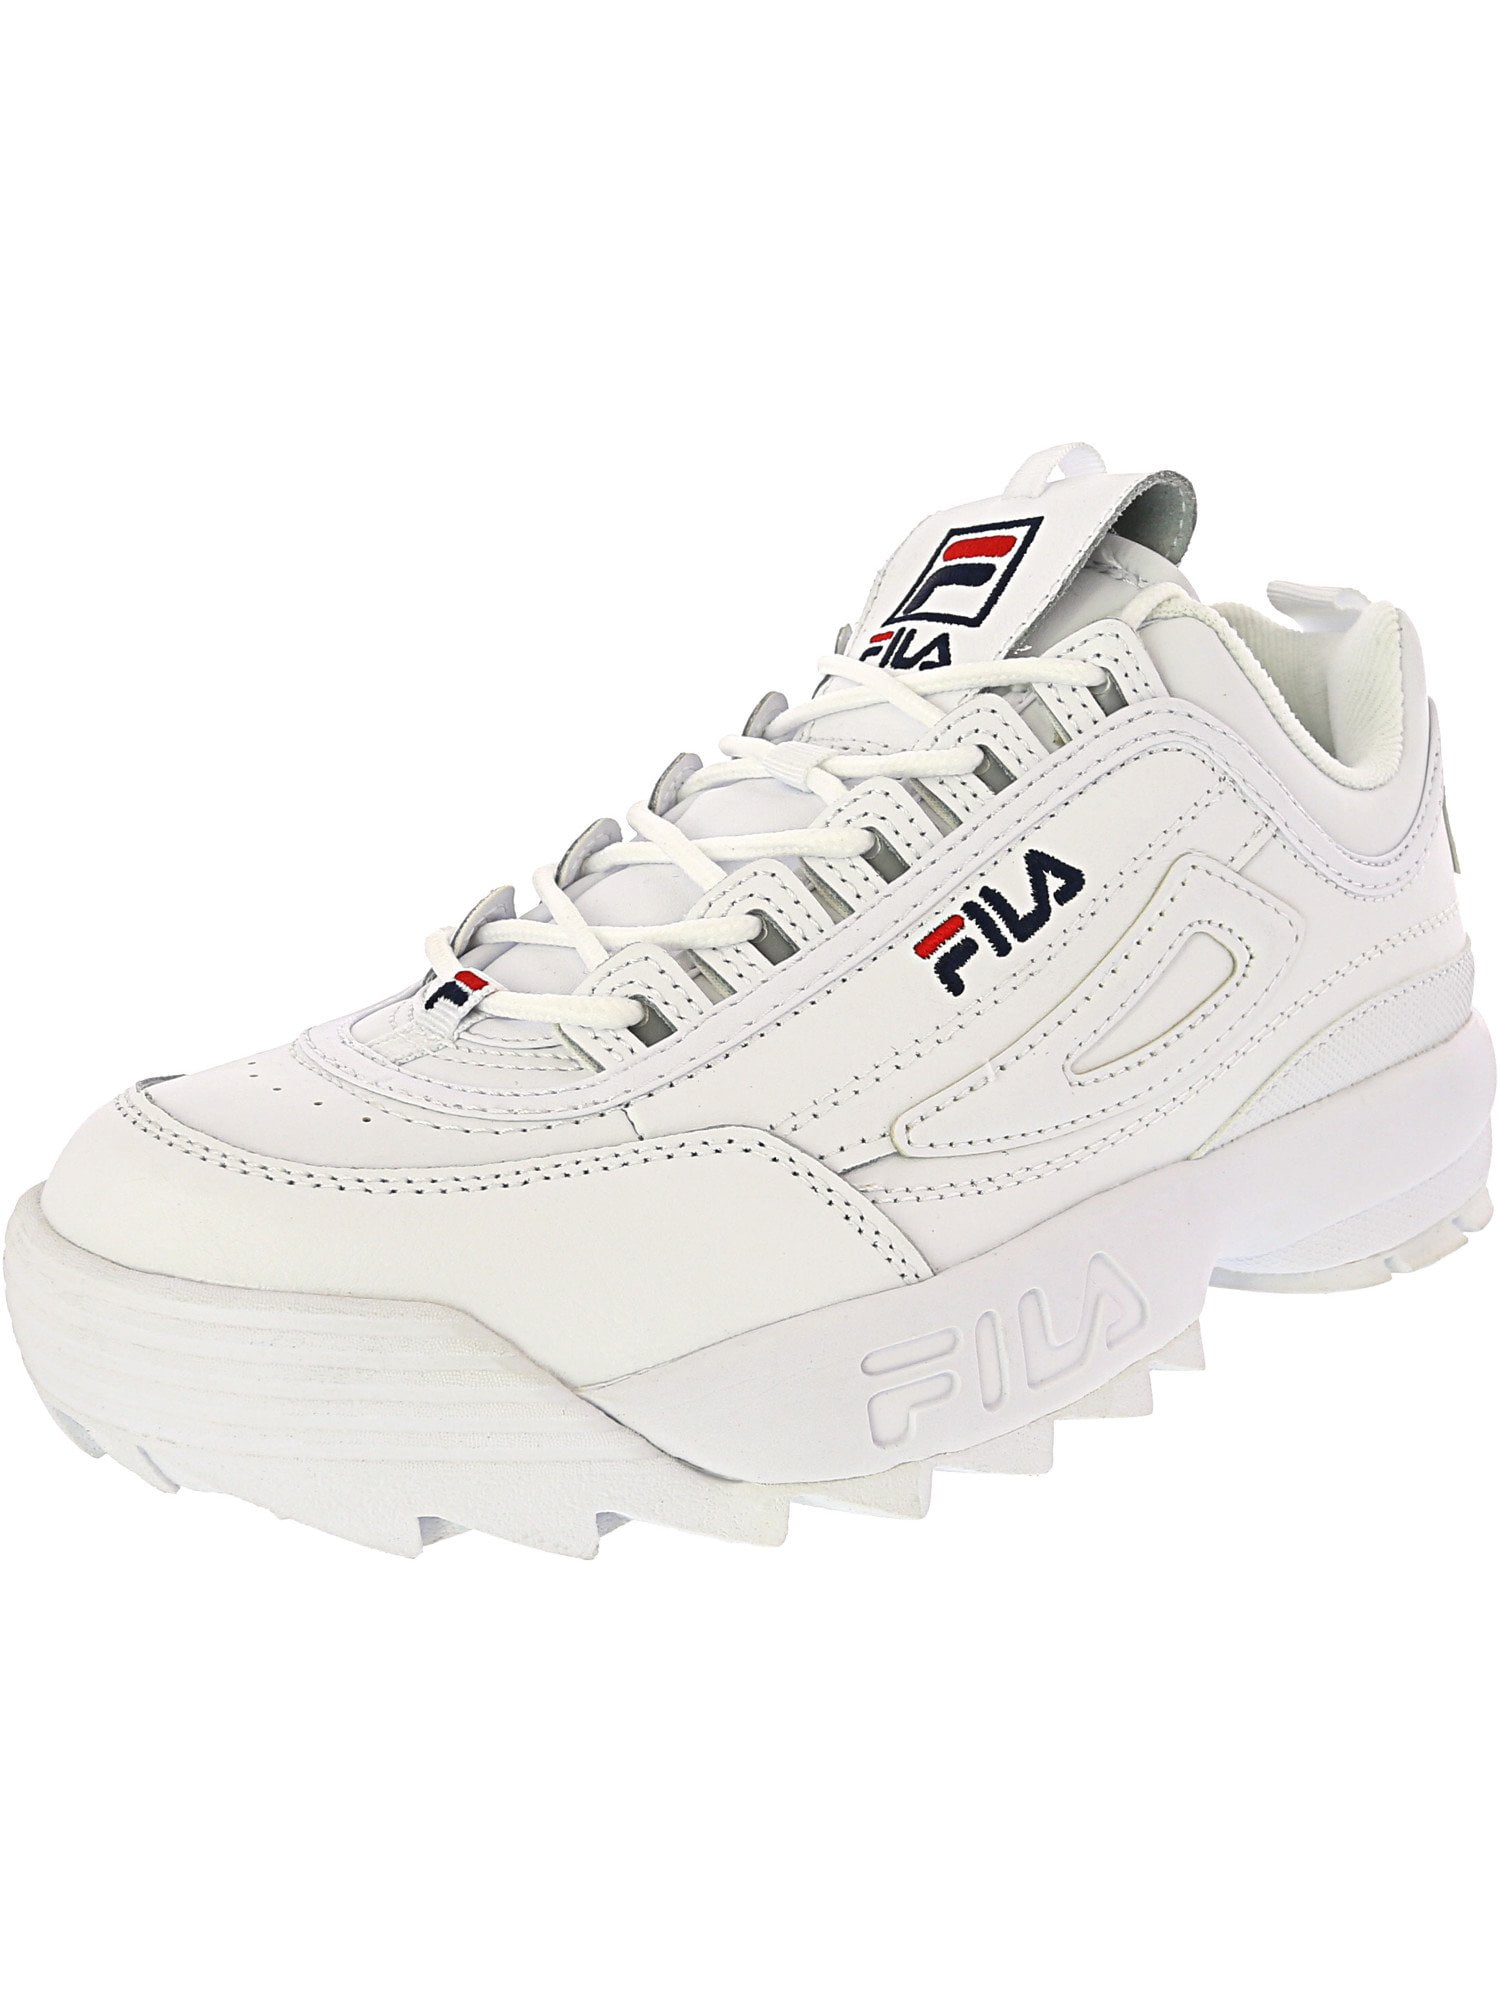 Fila Men's Disruptor II Athletic Shoe 